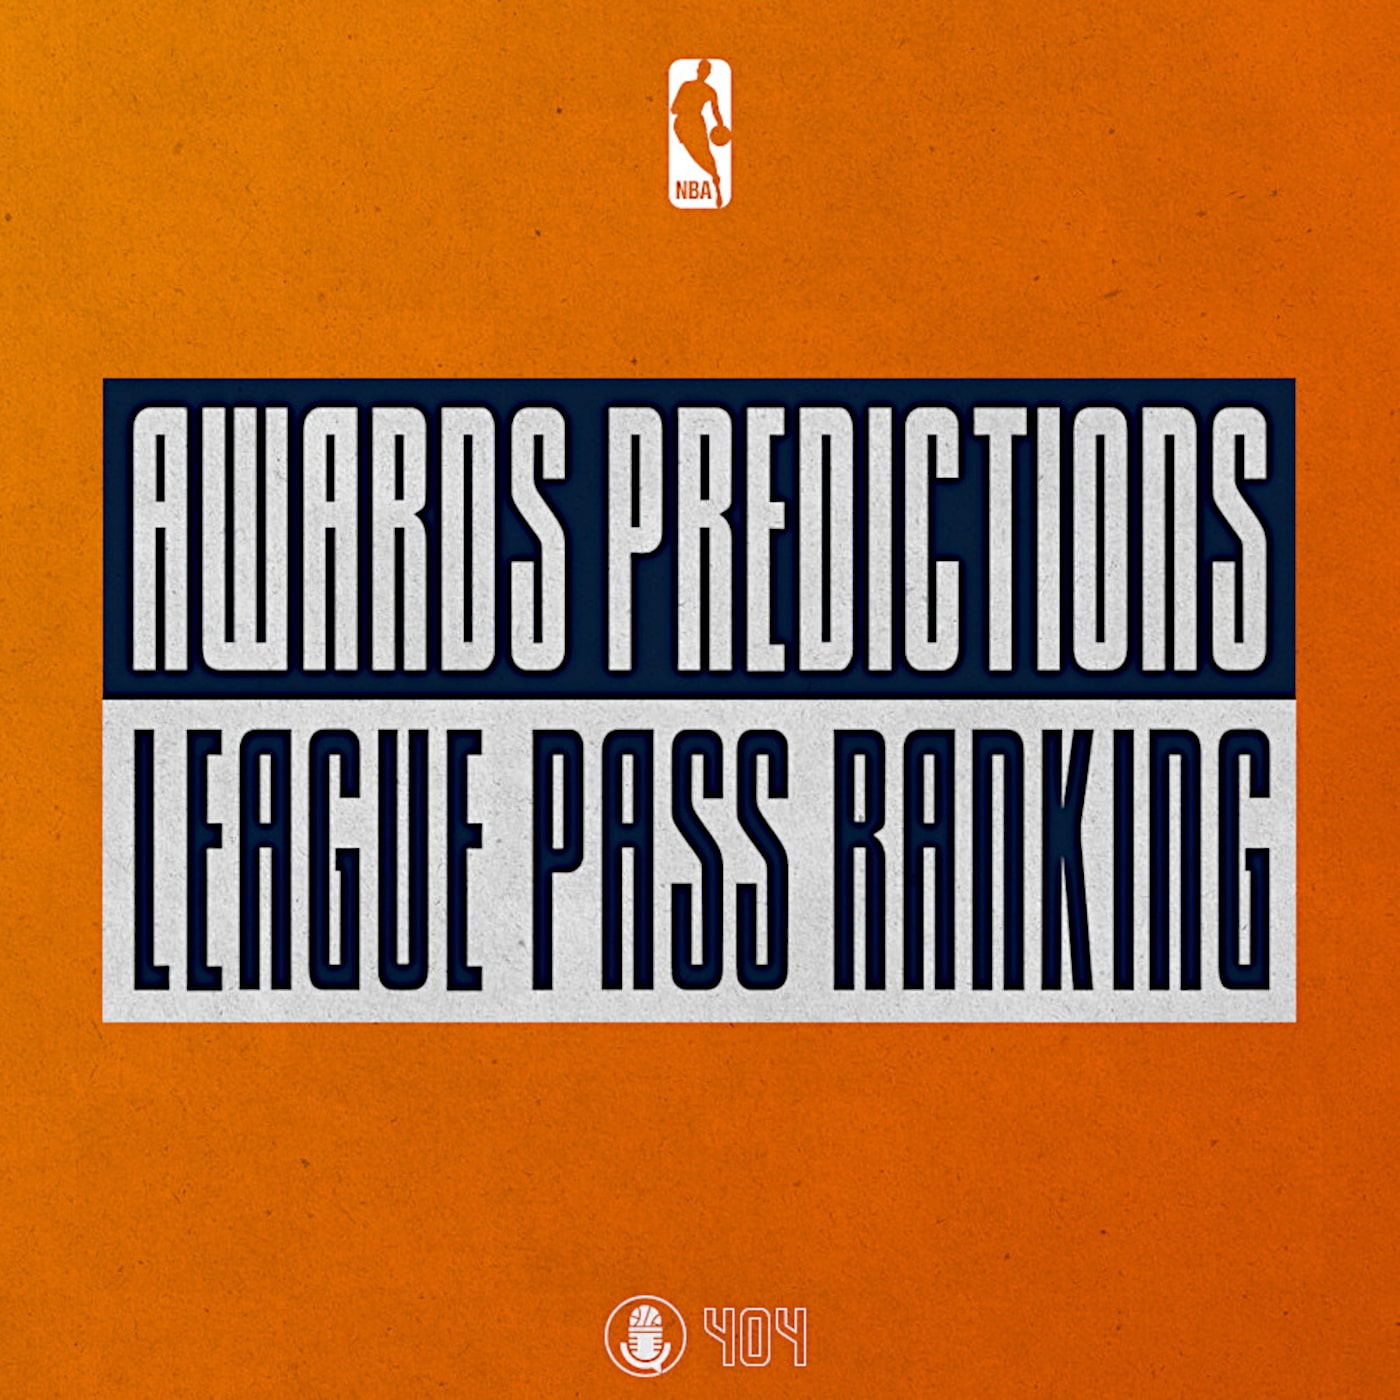 Awards & League Pass Ranking